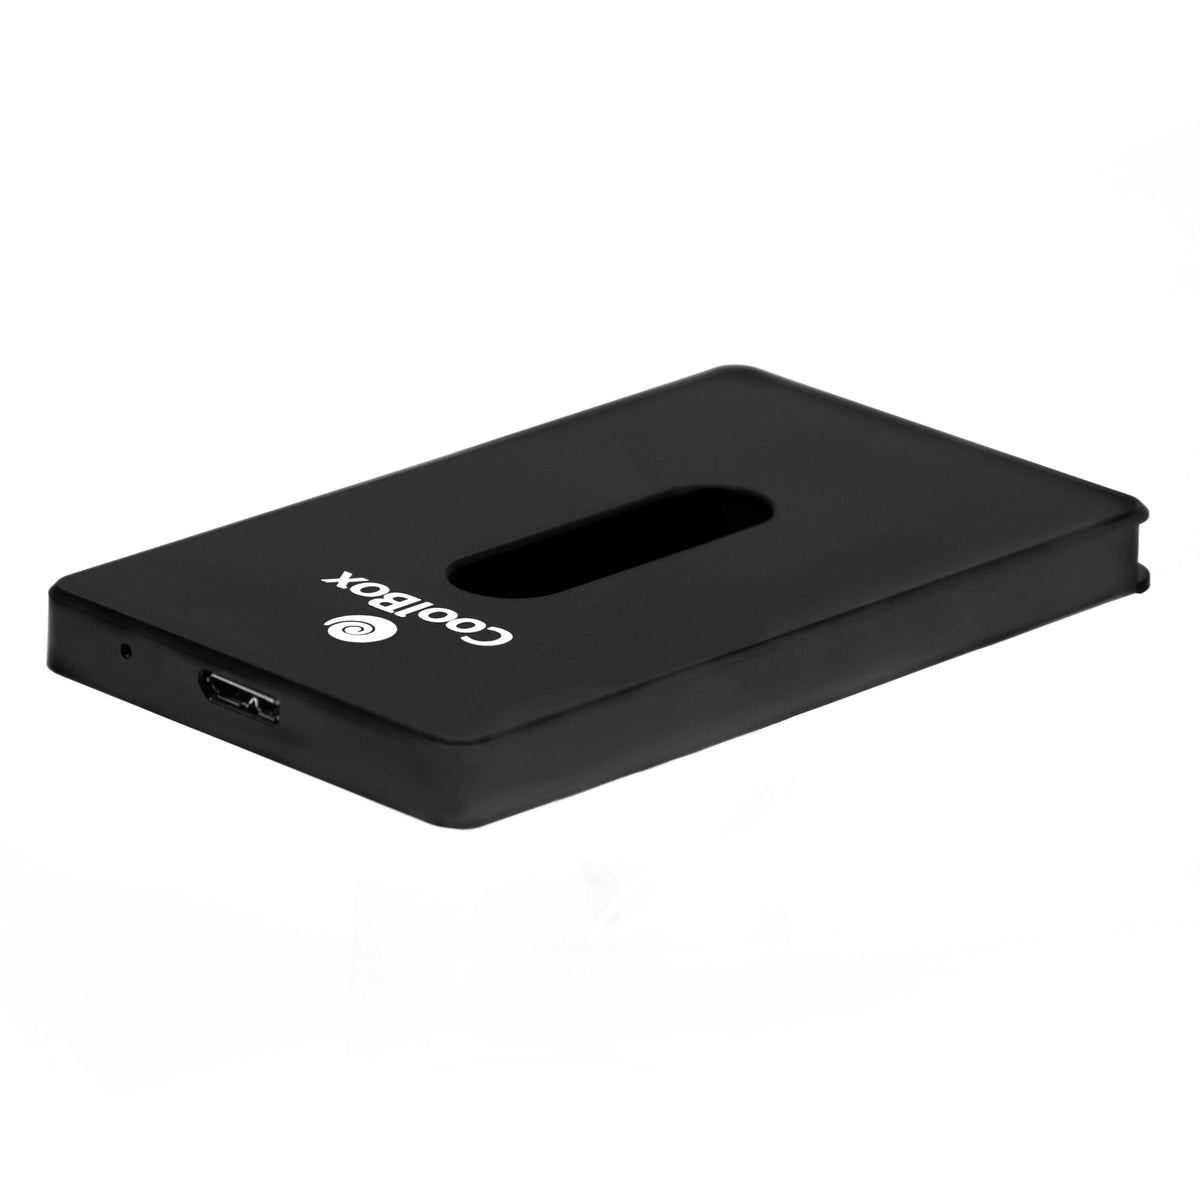 Caja para disco externo 2.5 7mm CoolBox S-2533 SLOT-IN USB 3.0 Negro